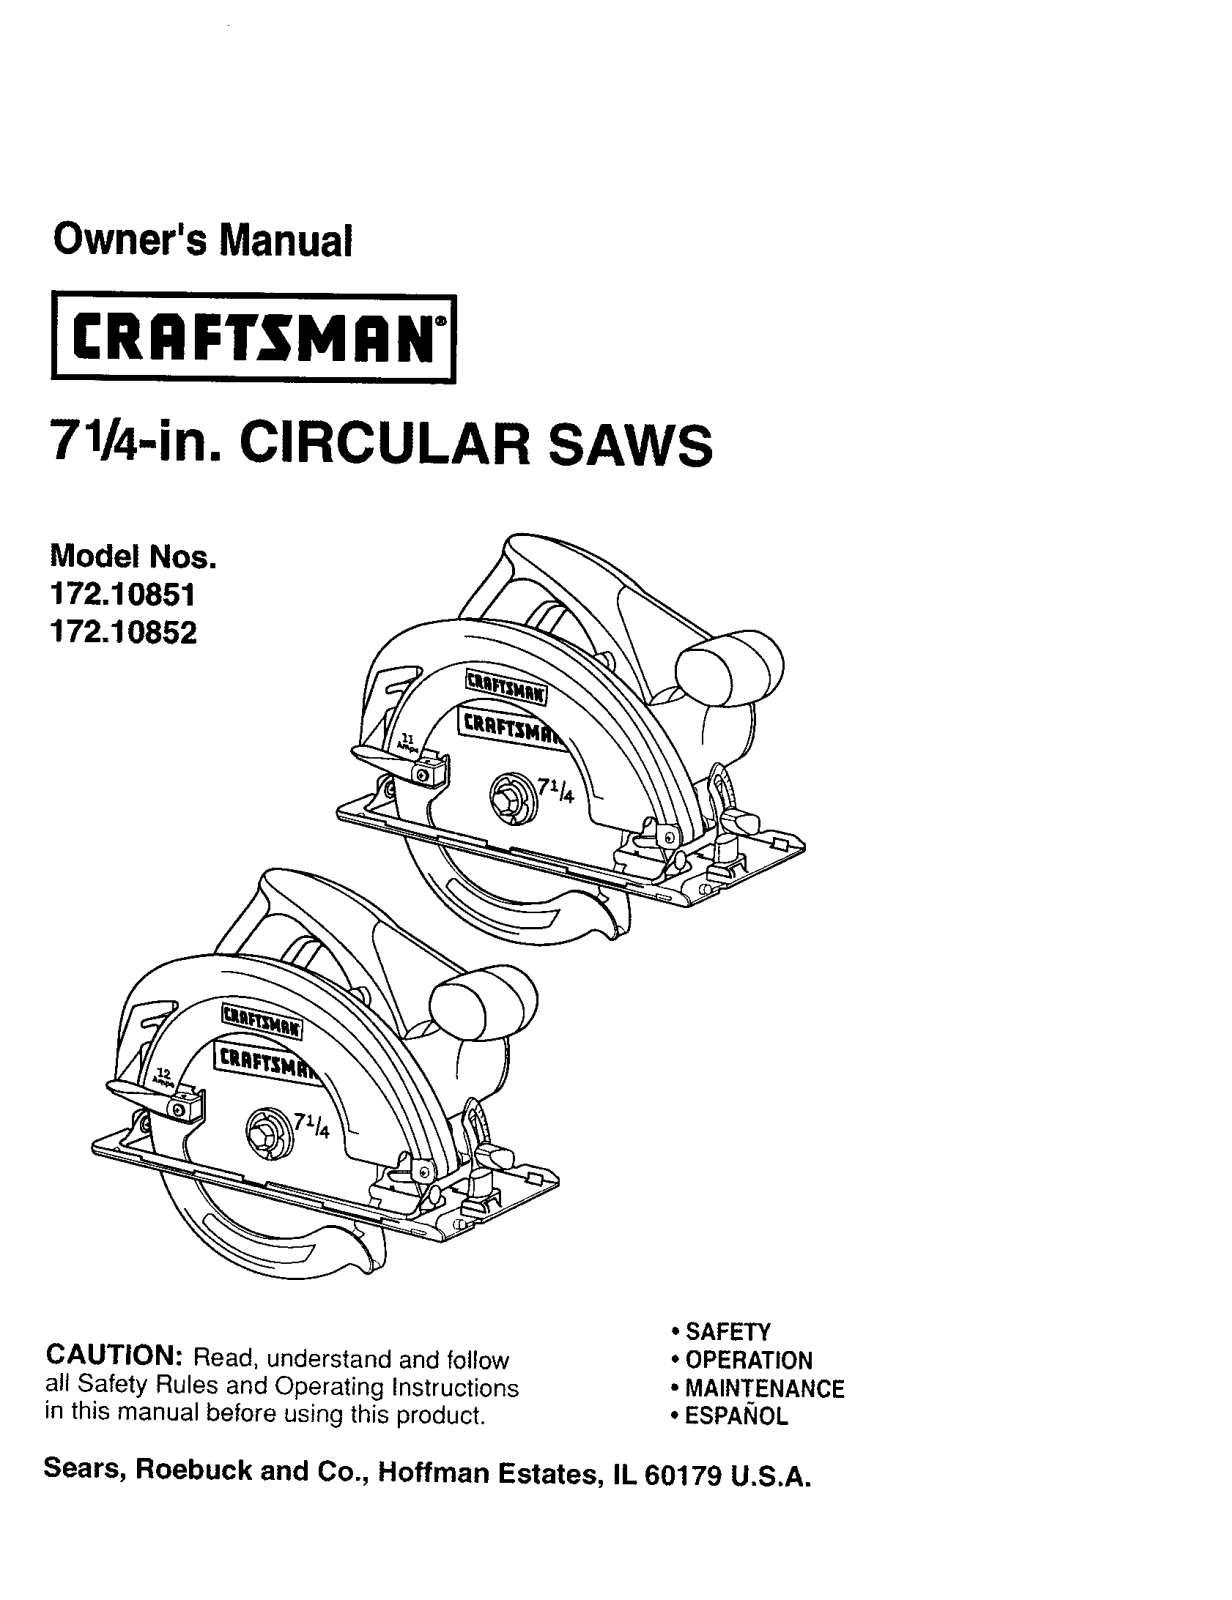 Craftsman 17210851, 17210852 Owner’s Manual